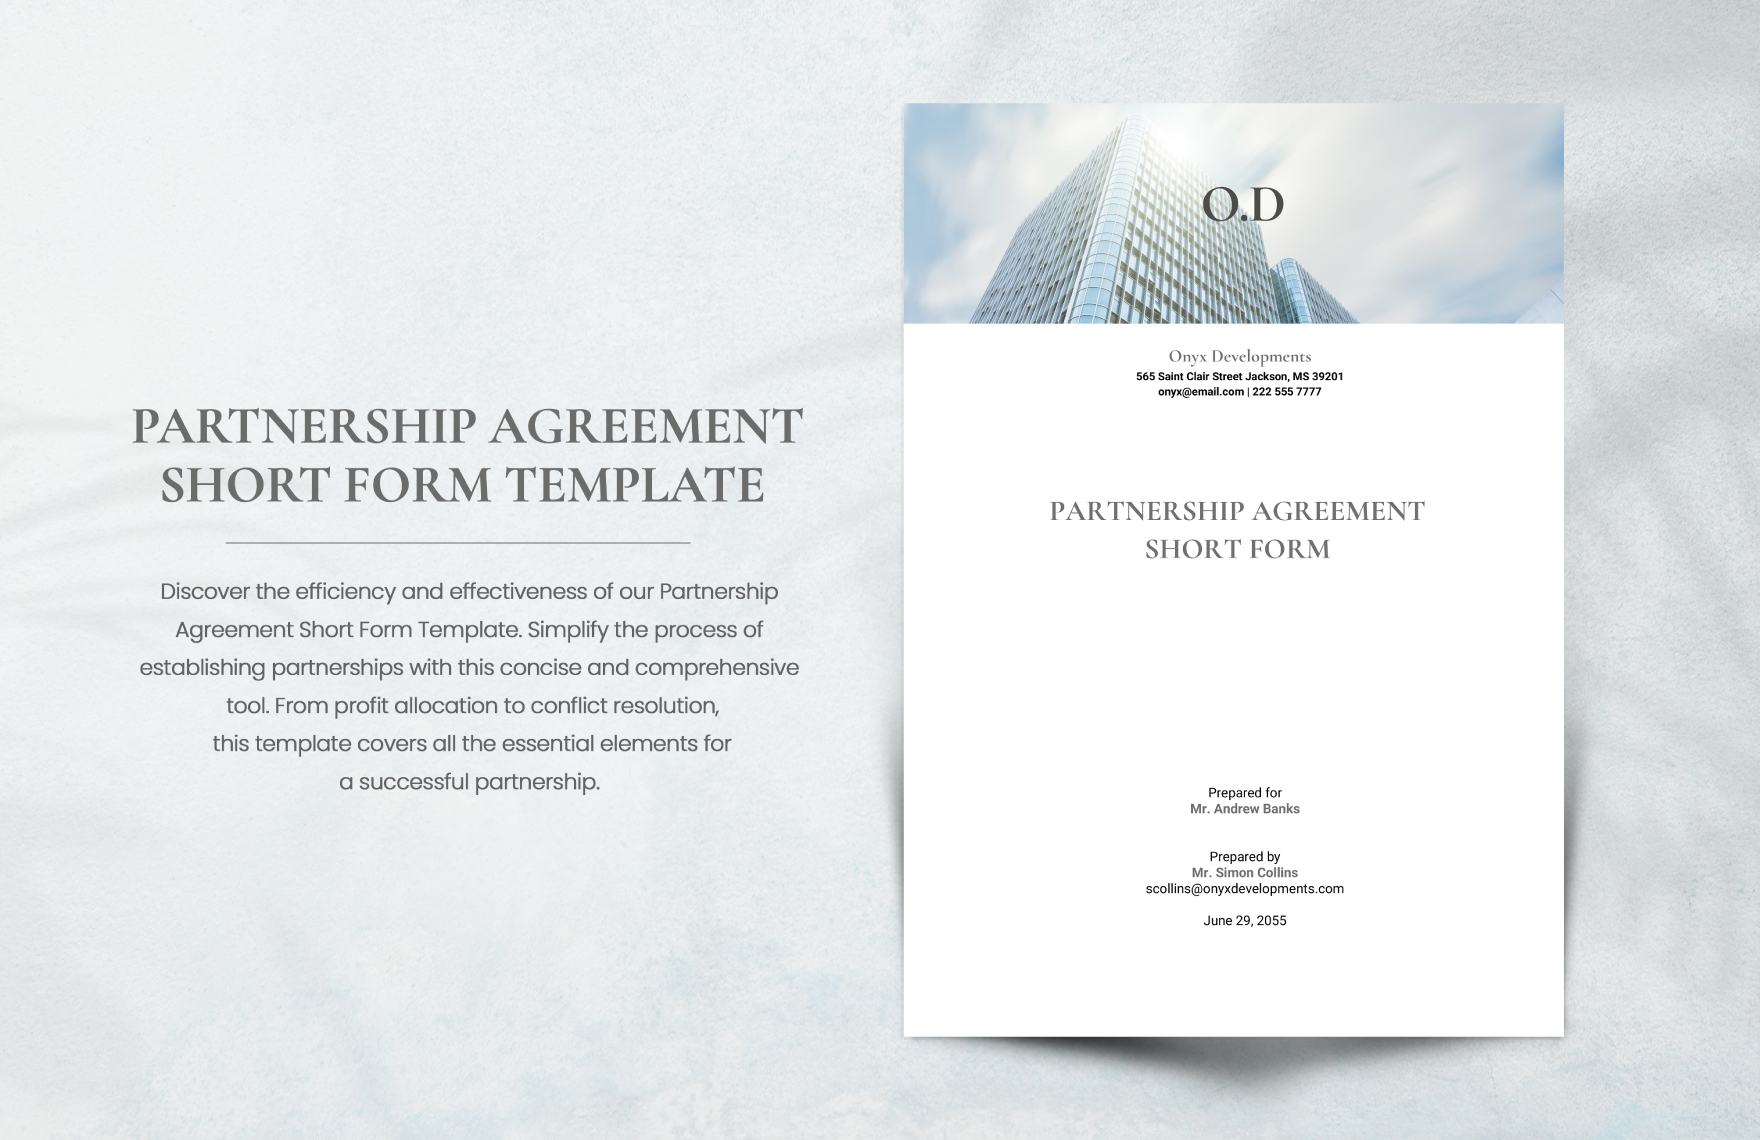 Partnership Agreement Short Form Template